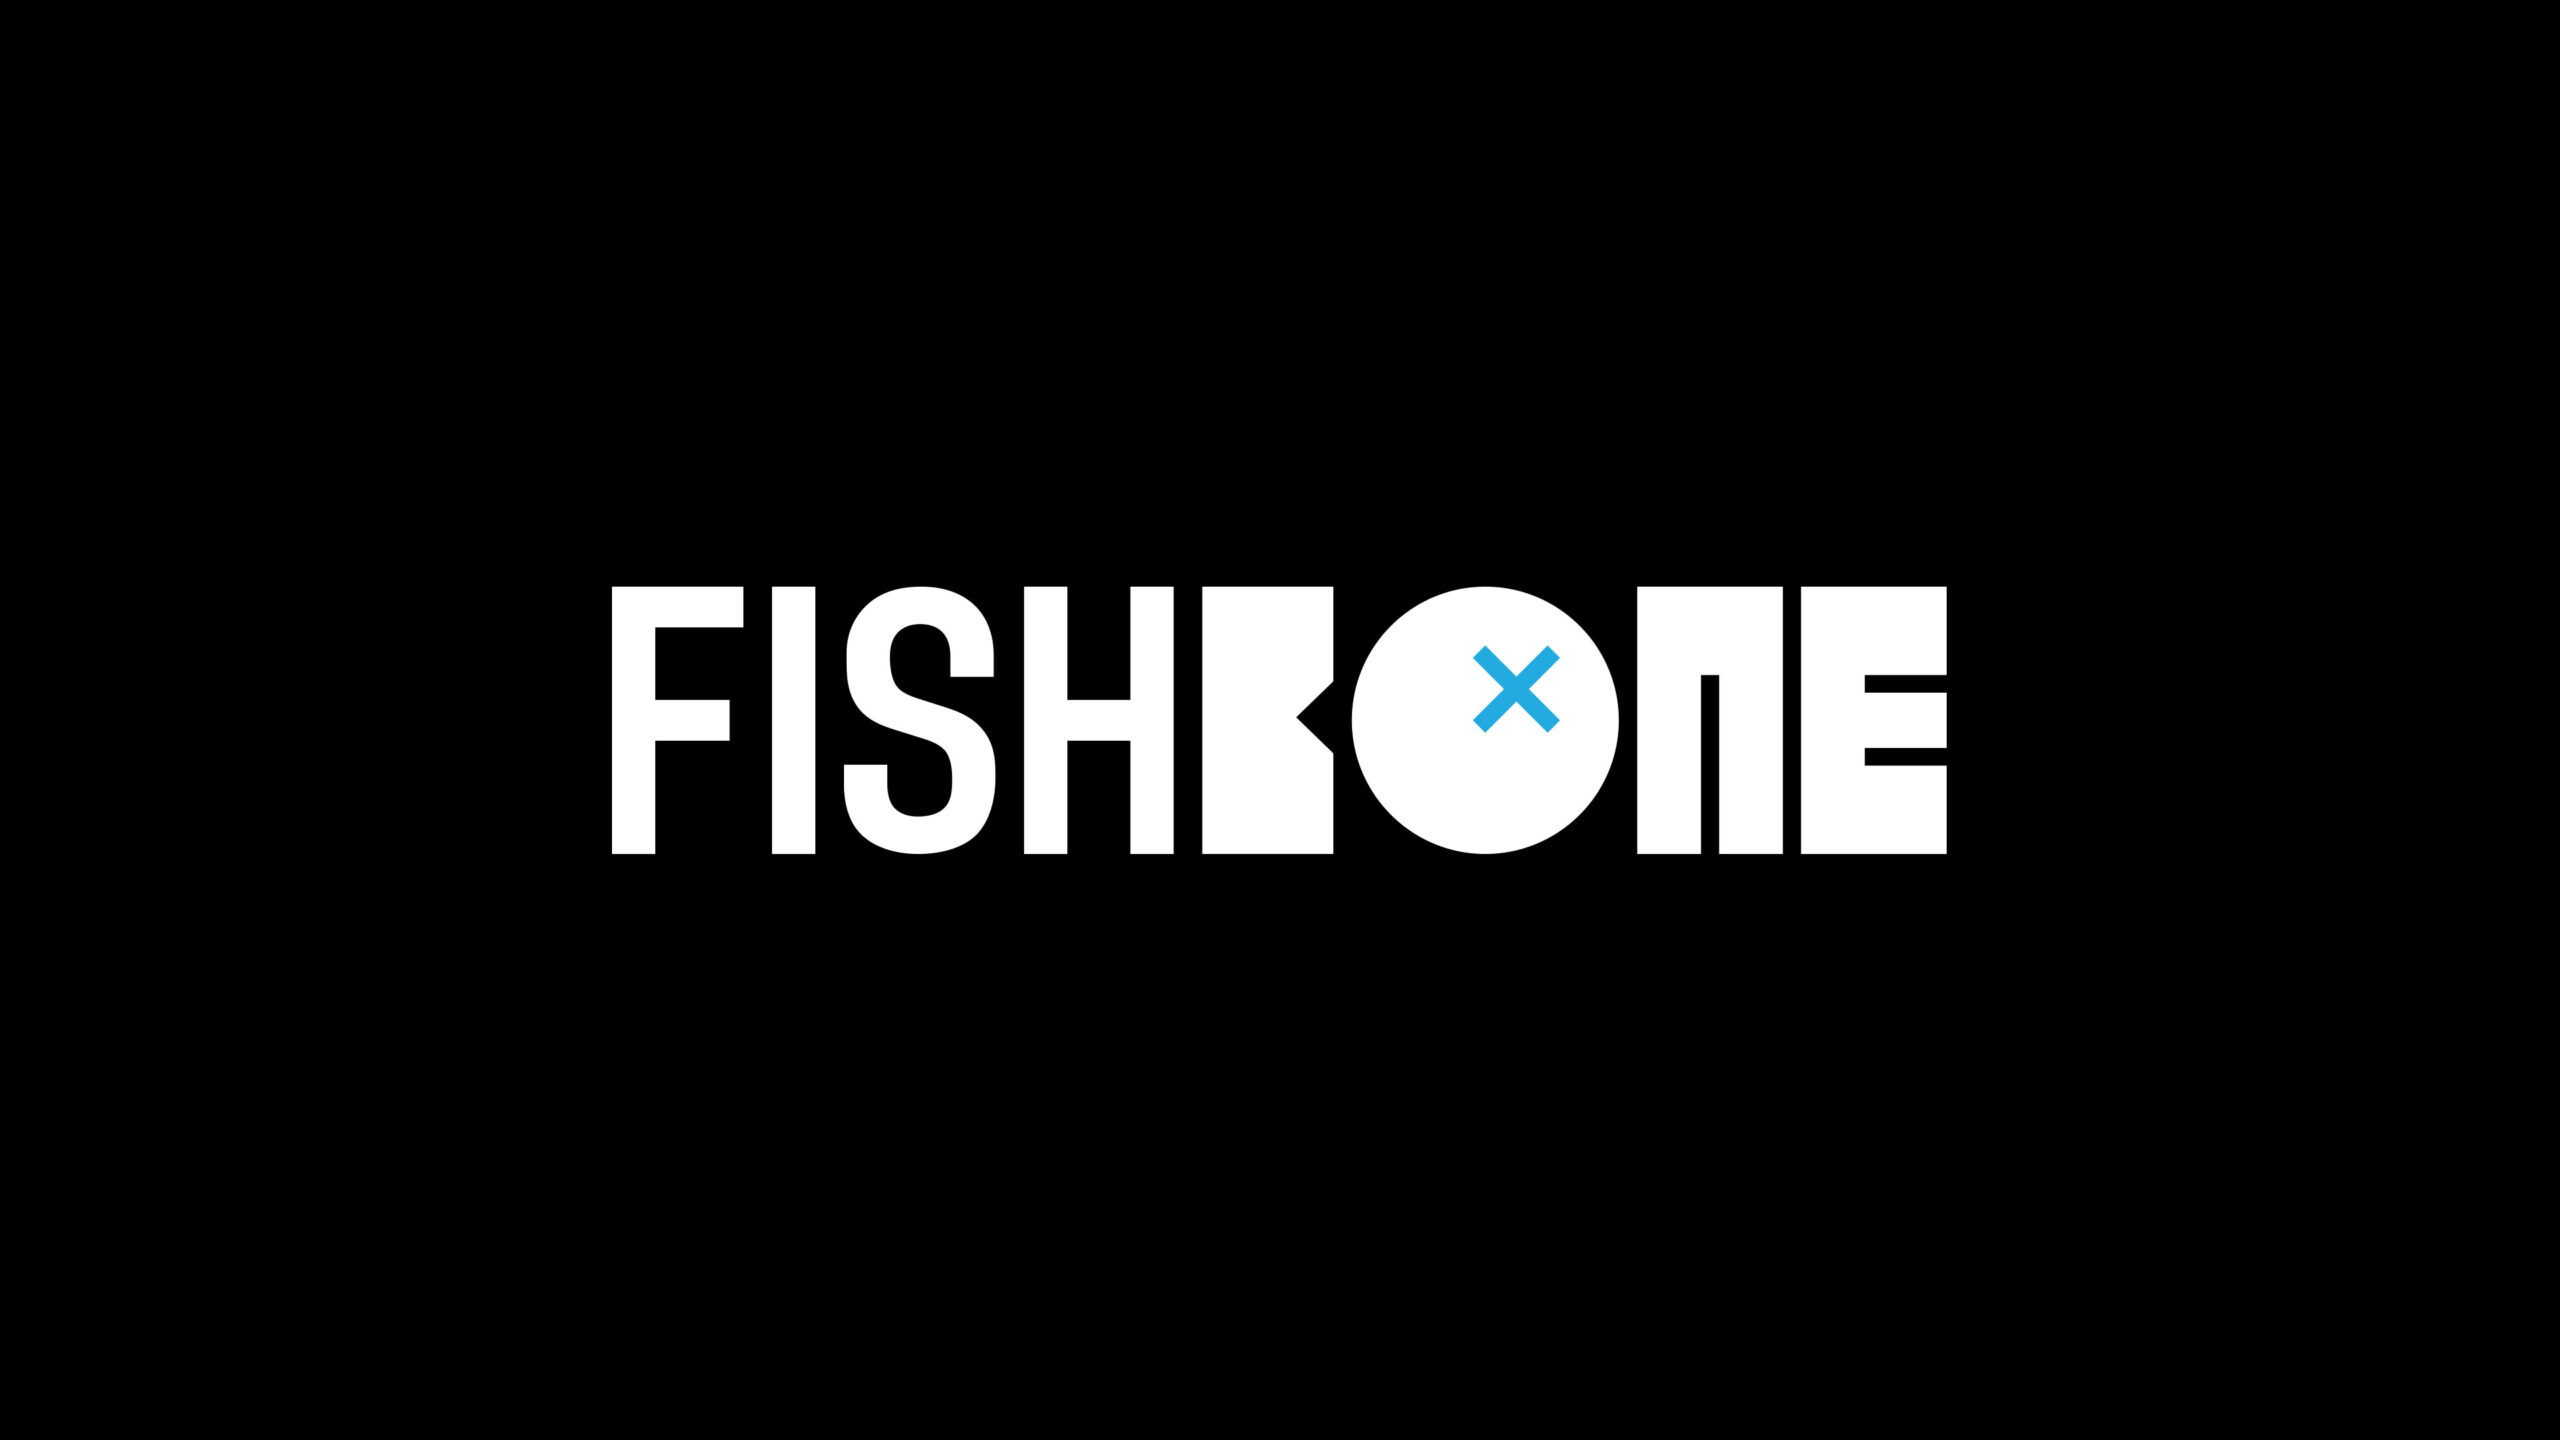 Fishbone-By-STORM-Desing-Studio-03